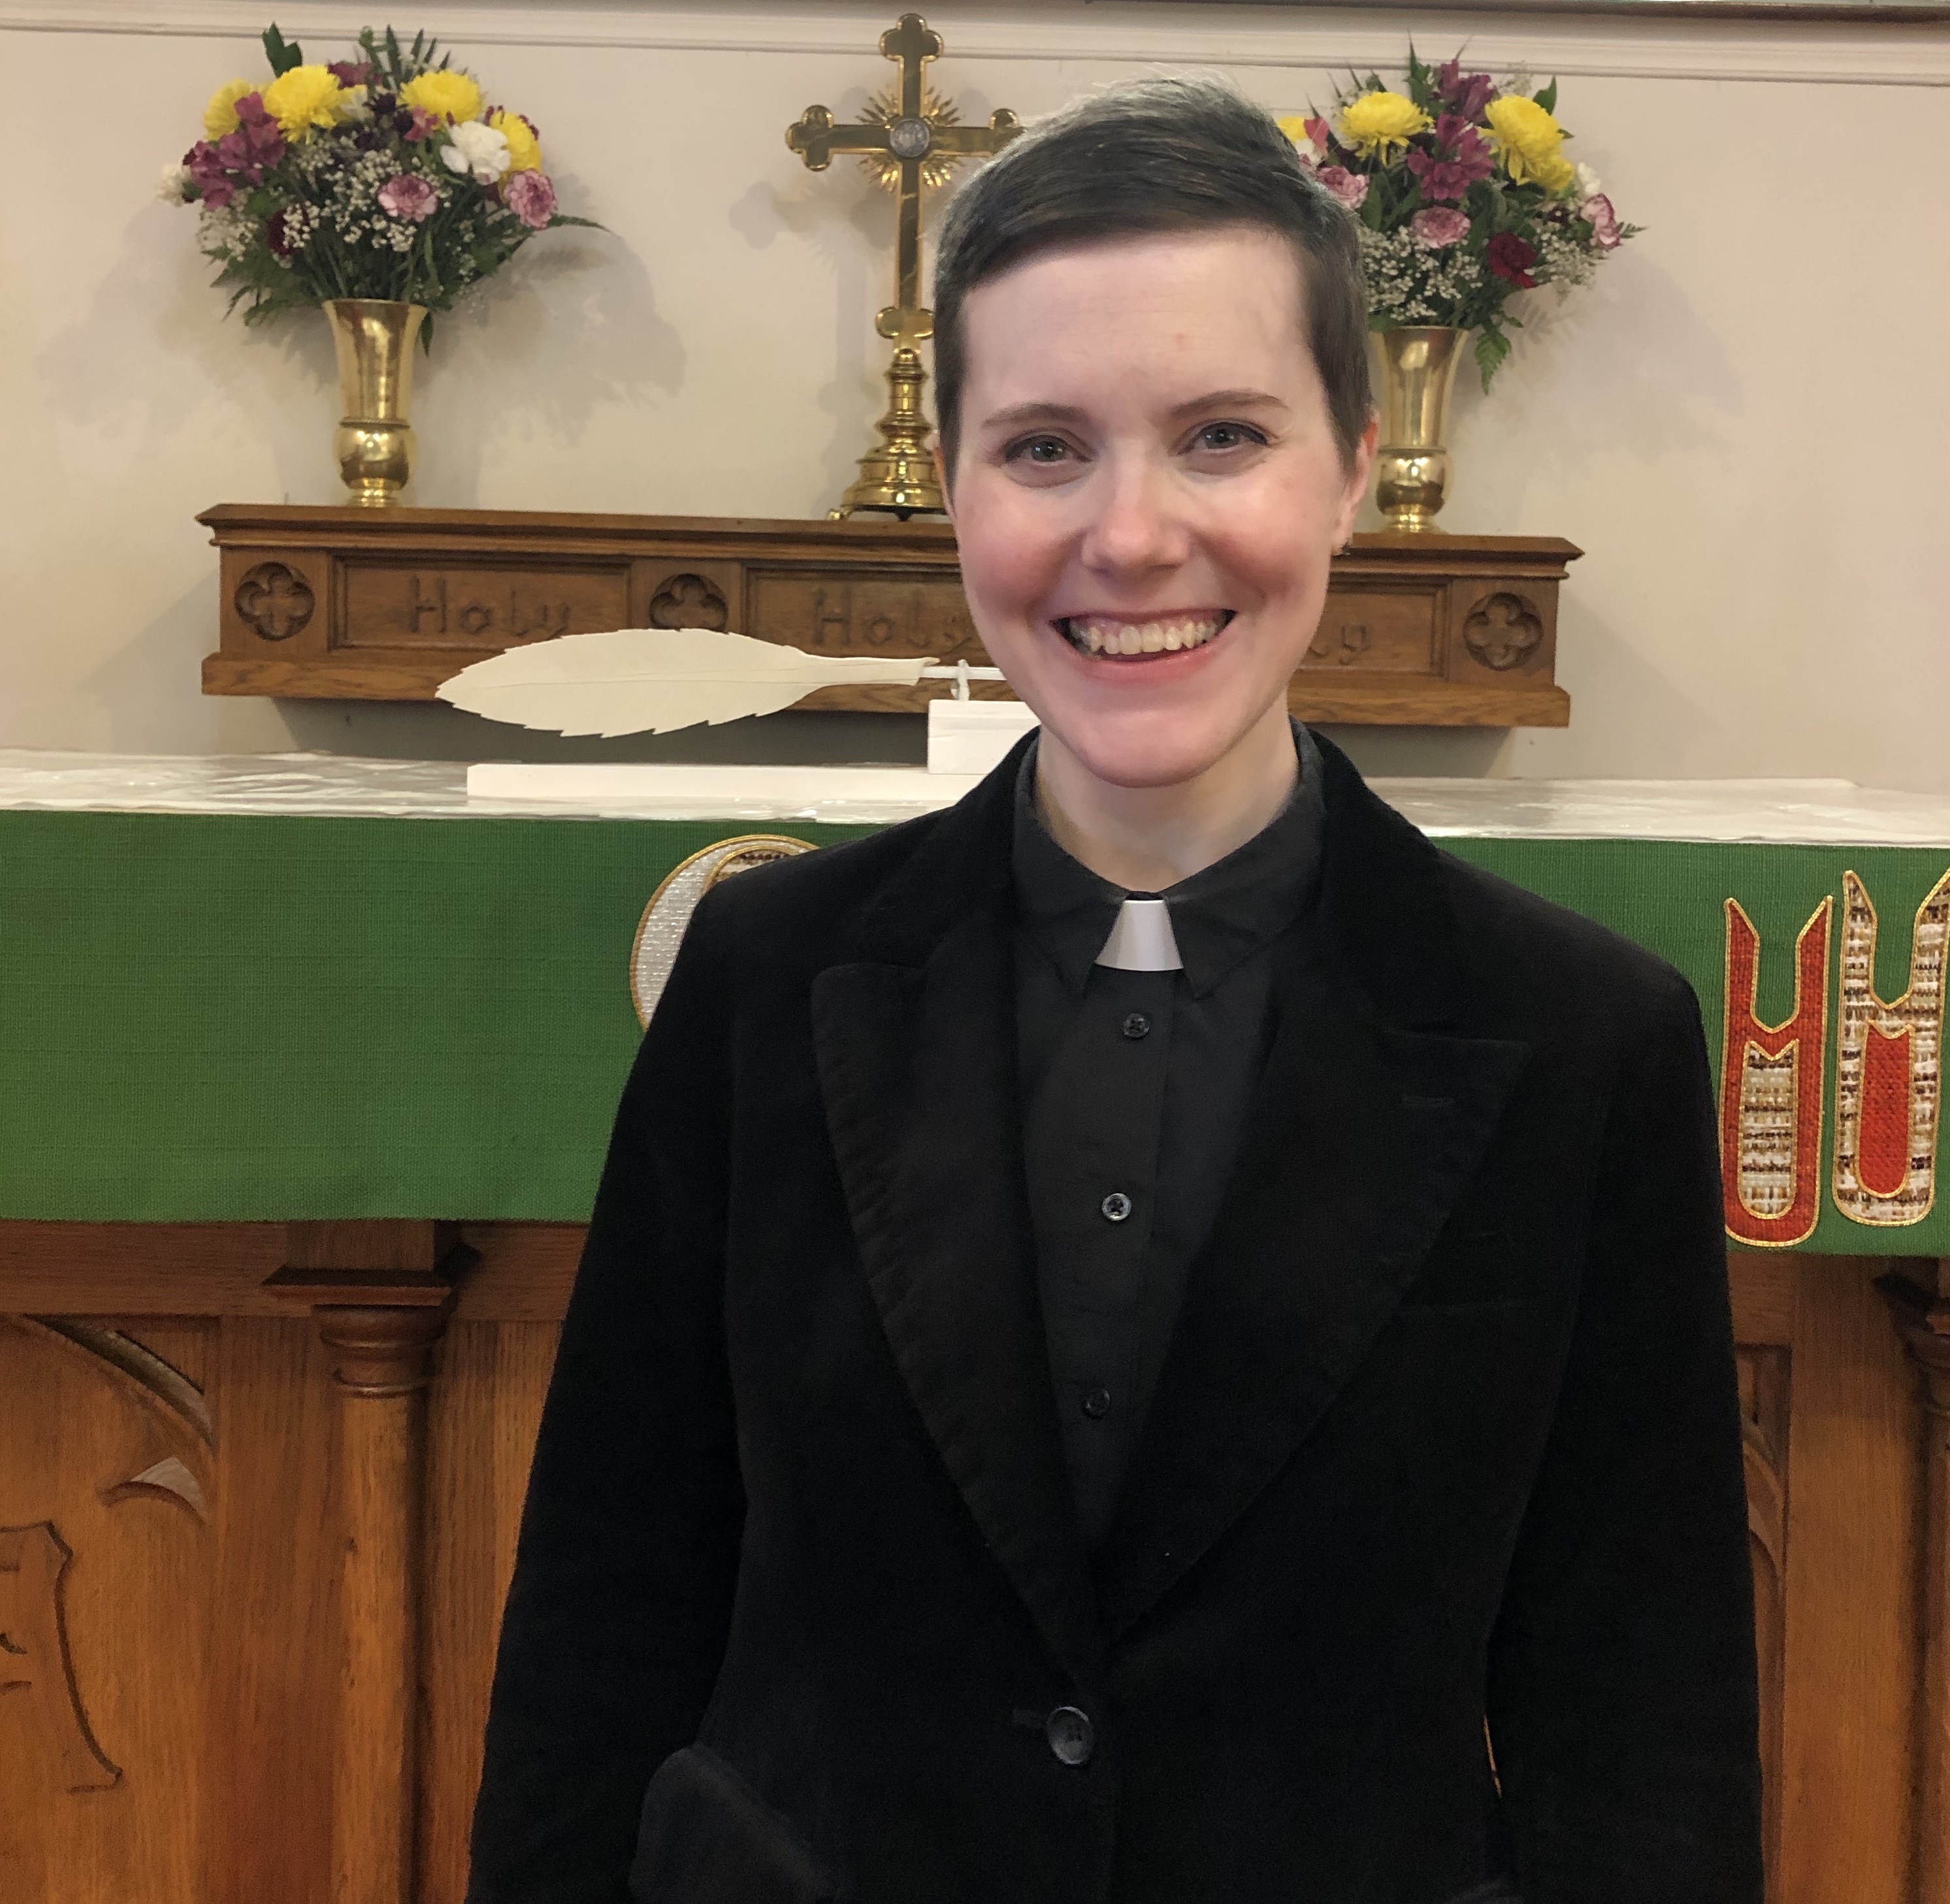 Our new incumbent, Rev. Dr. Alana McCord